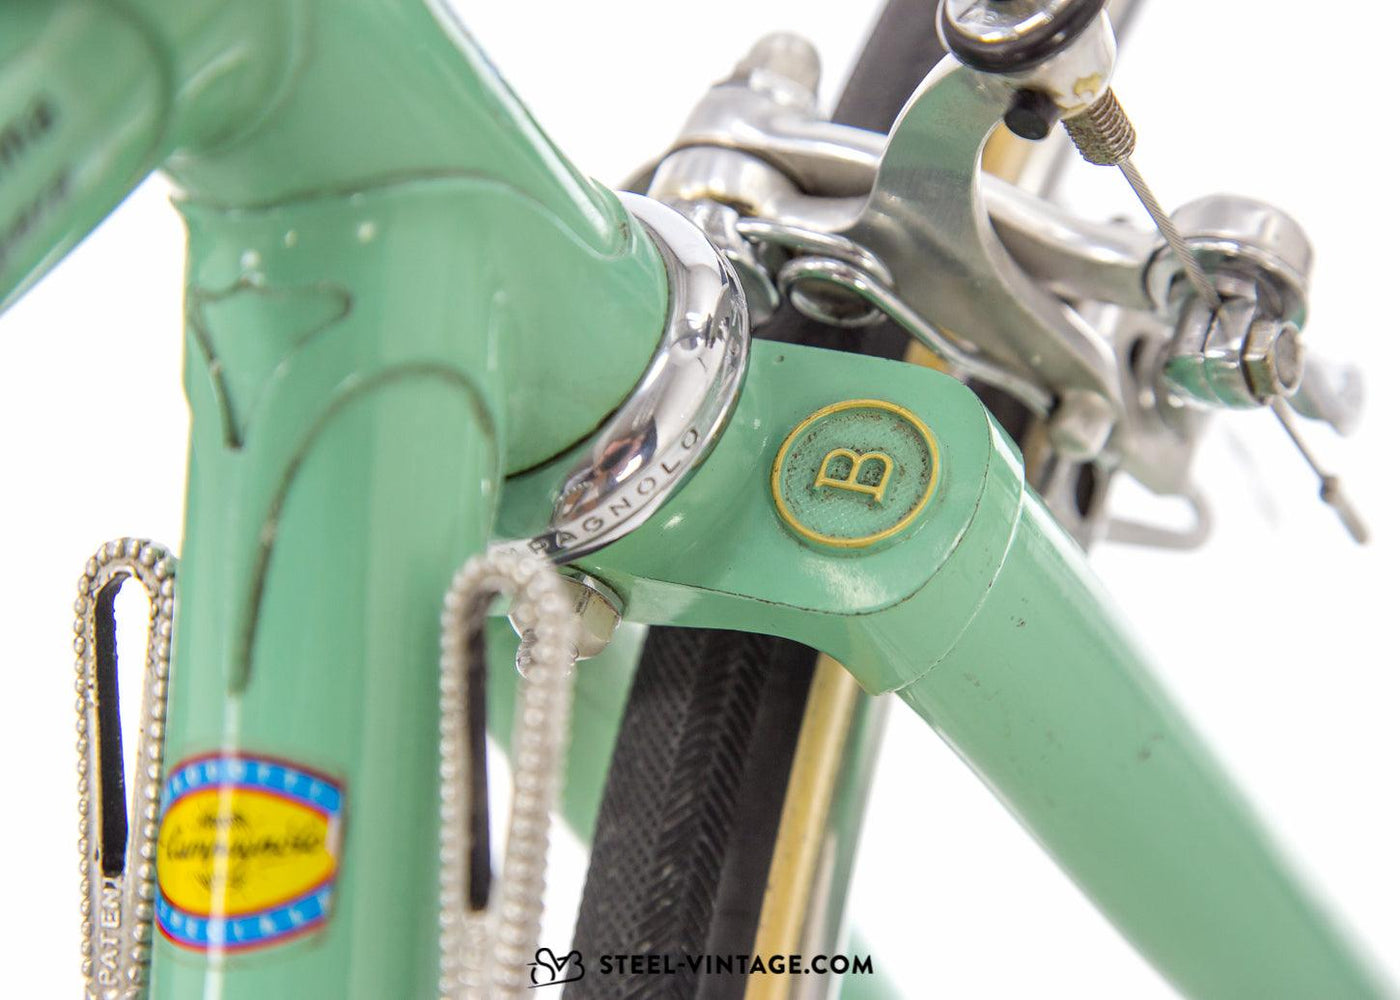 Bianchi Specialissima Superleggera Road Bike 1977 - Steel Vintage Bikes